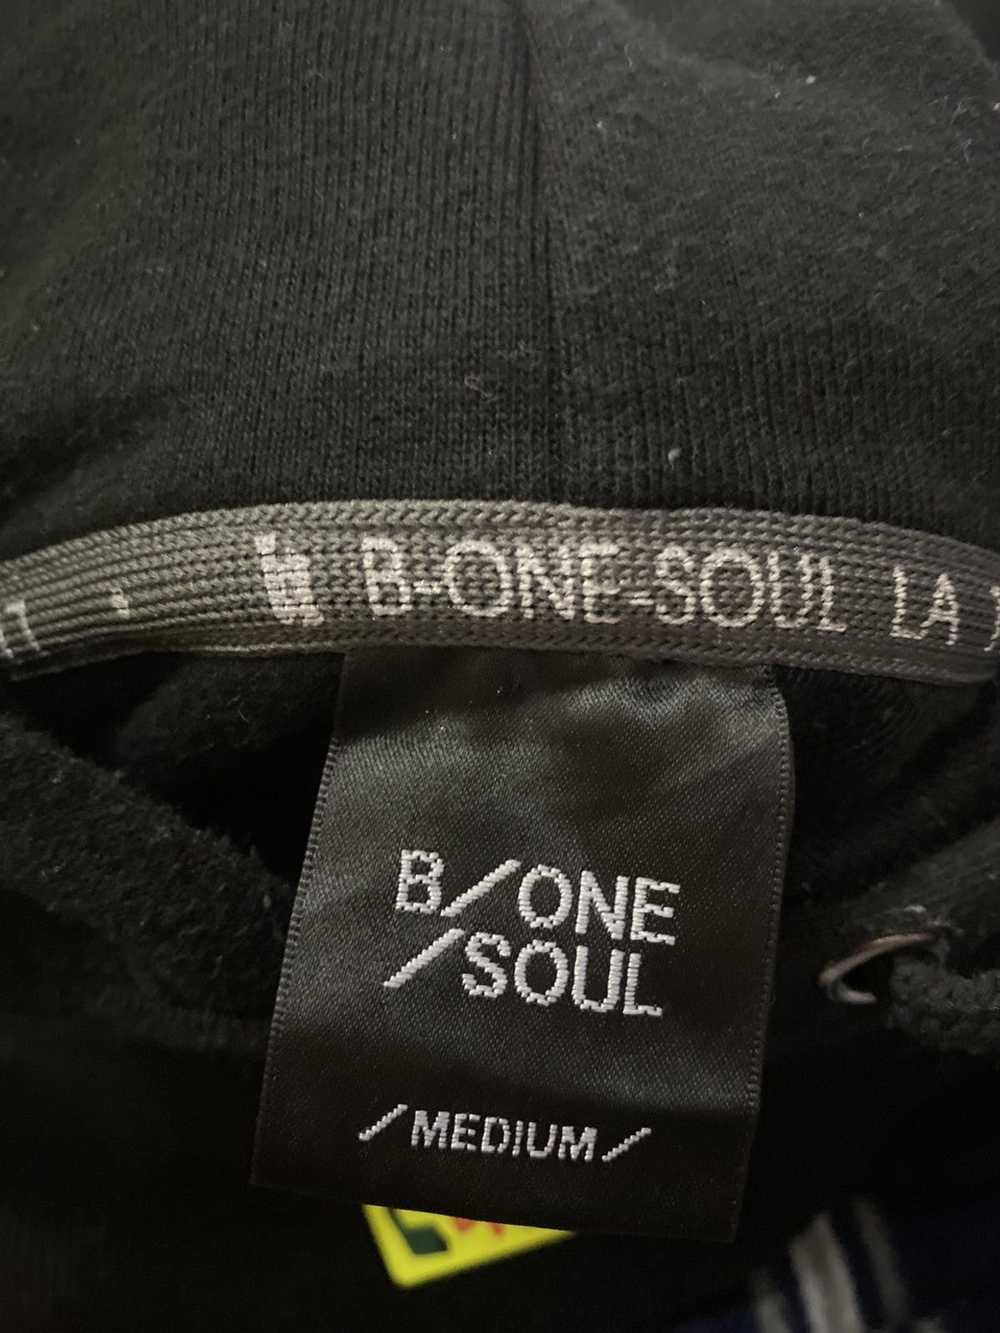 Japanese Brand B-one-soul - image 7